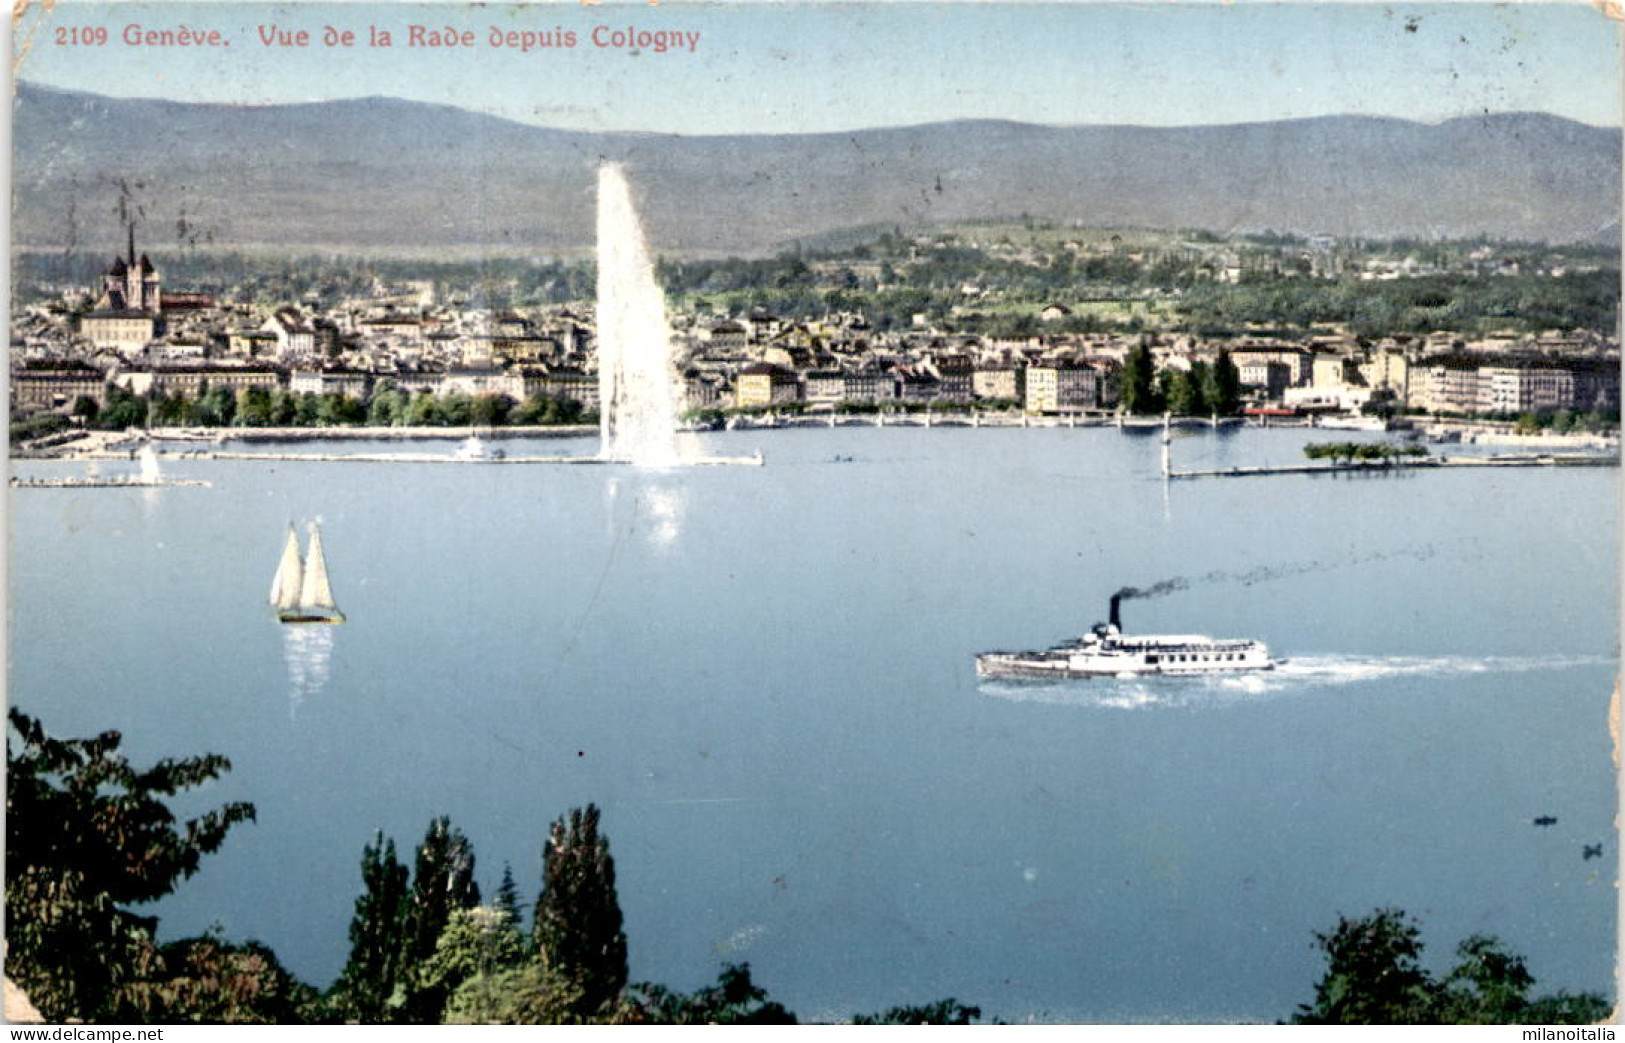 Geneve - Vue De La Rade Depuis Cologny (2109) * 23. 6. 1922 - Cologny